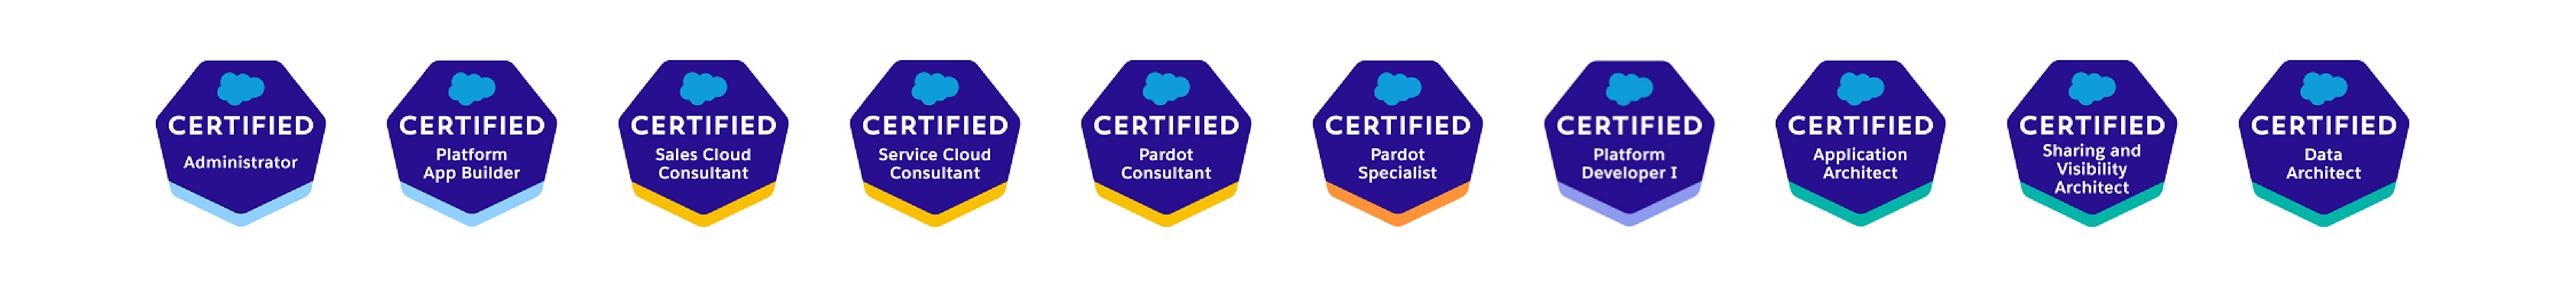 Certifications-Salesforce